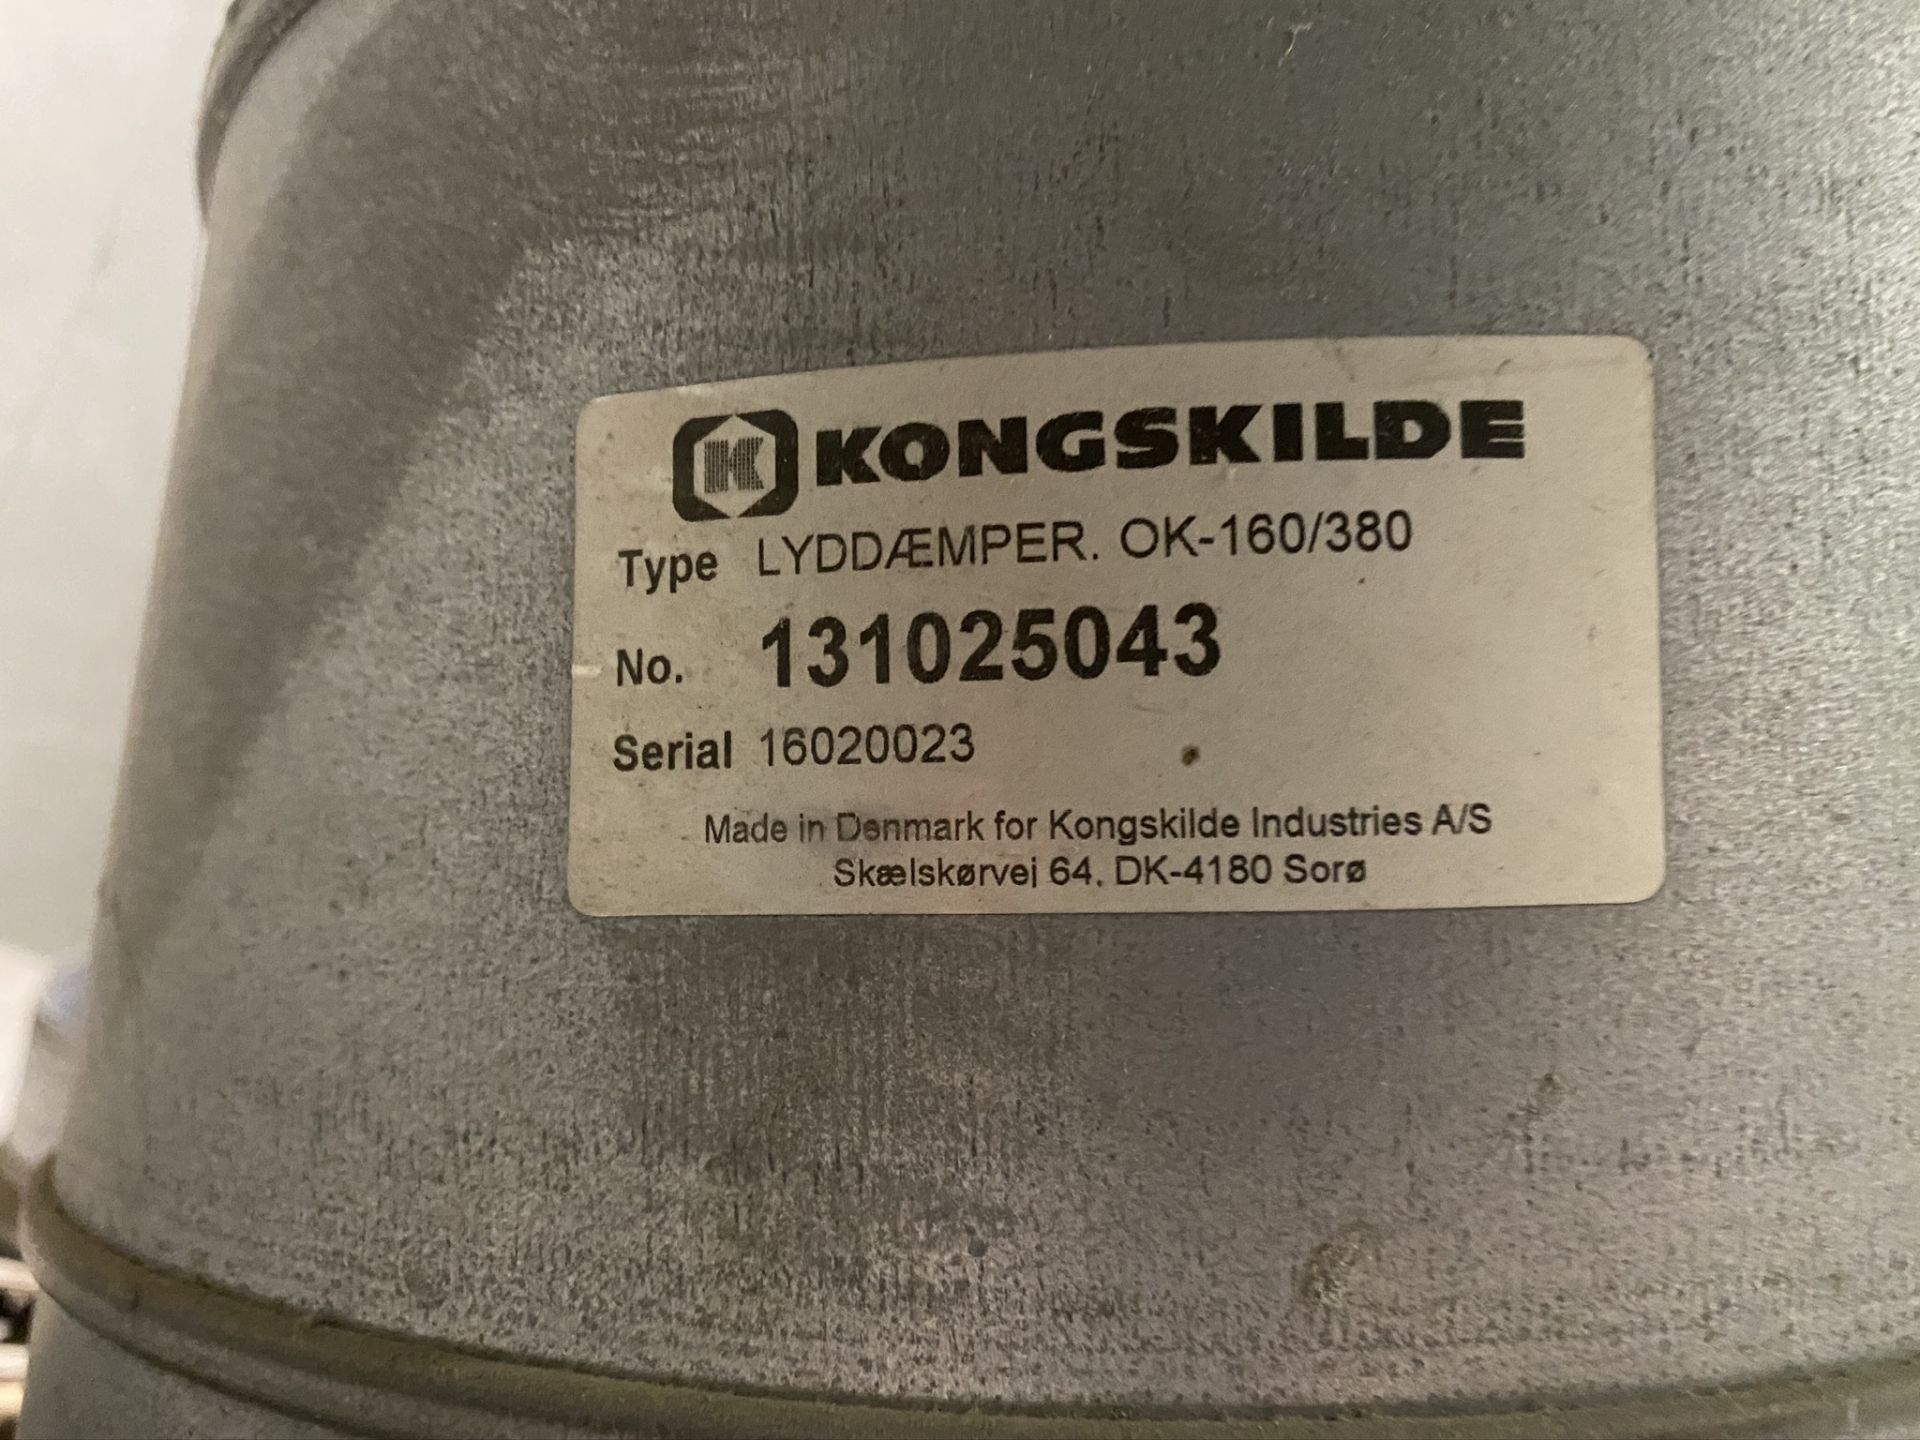 Kongskilde model 125200489 Blower Assembly S/N 29330001 with Kongskilde chimney model 131025043 S/ - Image 5 of 5